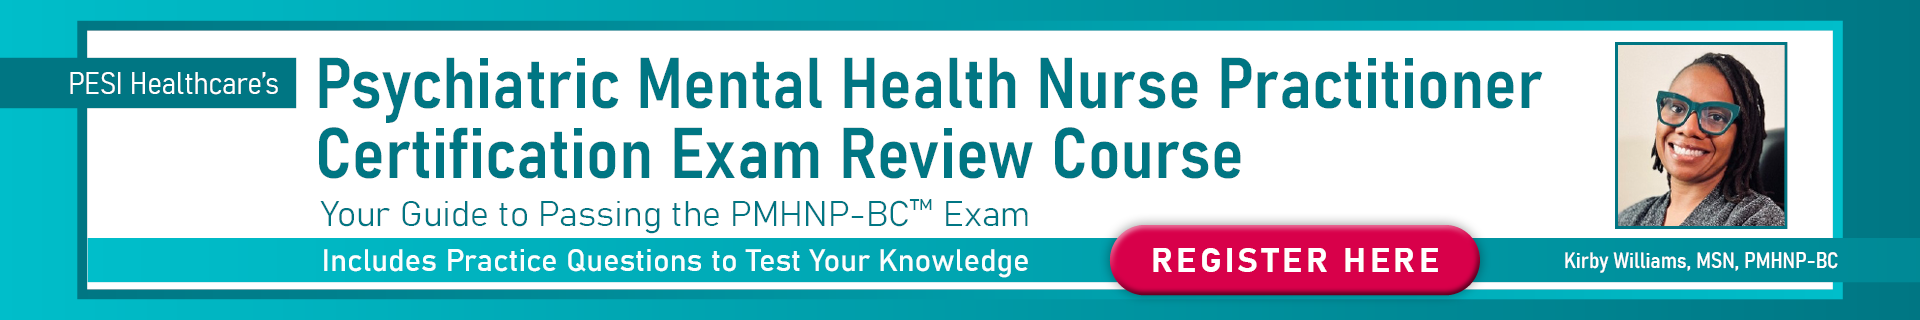 Psychiatric Mental Health Nurse Practitioner Certification Review Course